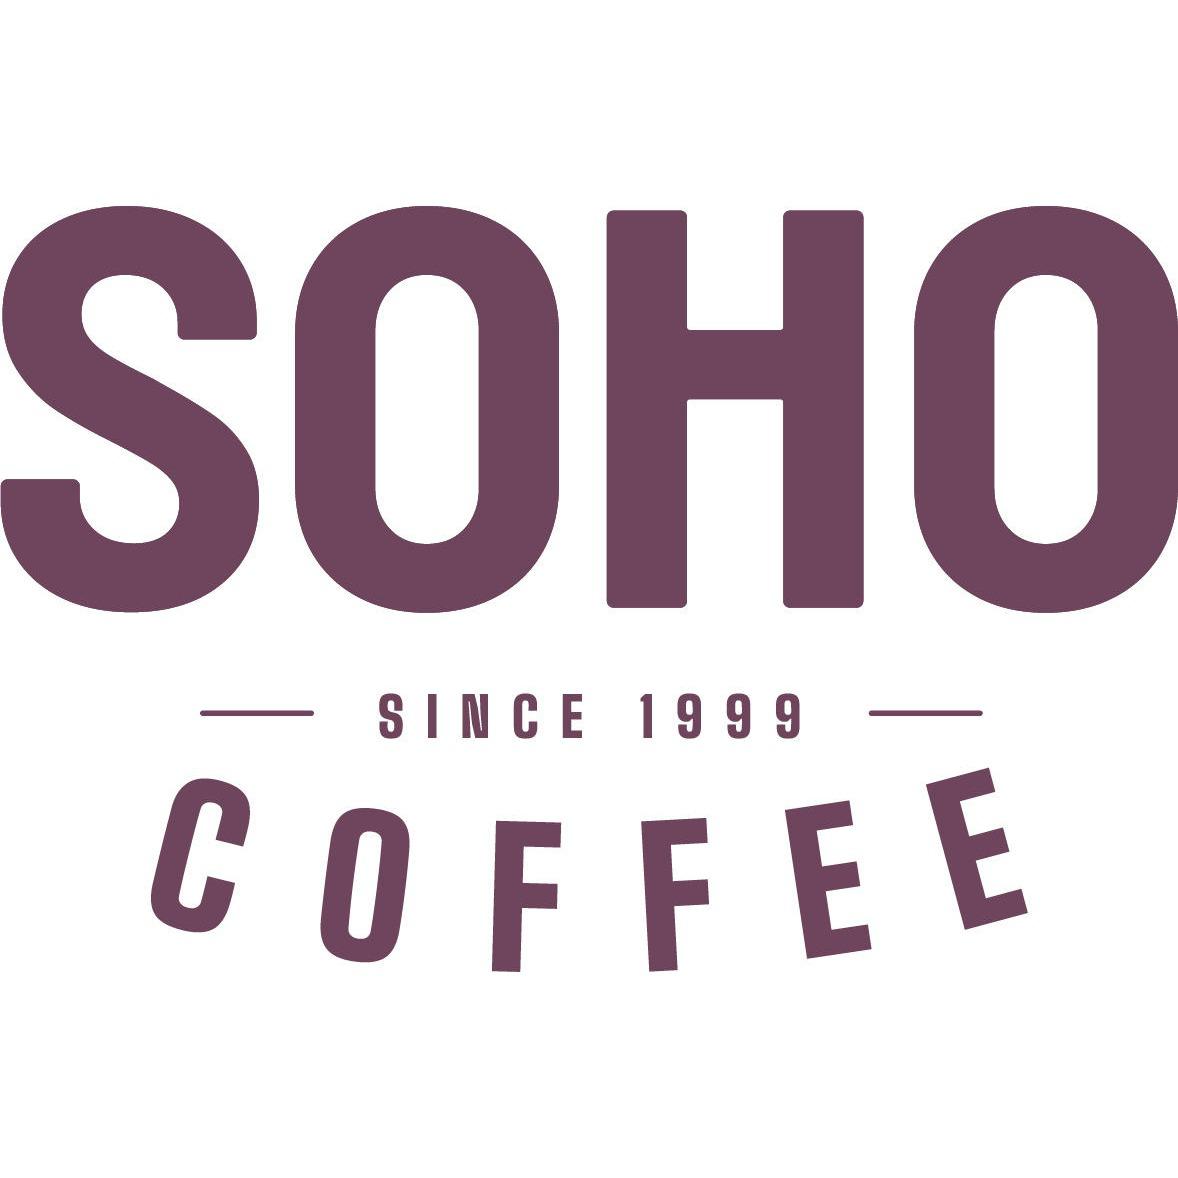 SOHO Coffee Bristol 01173 700706